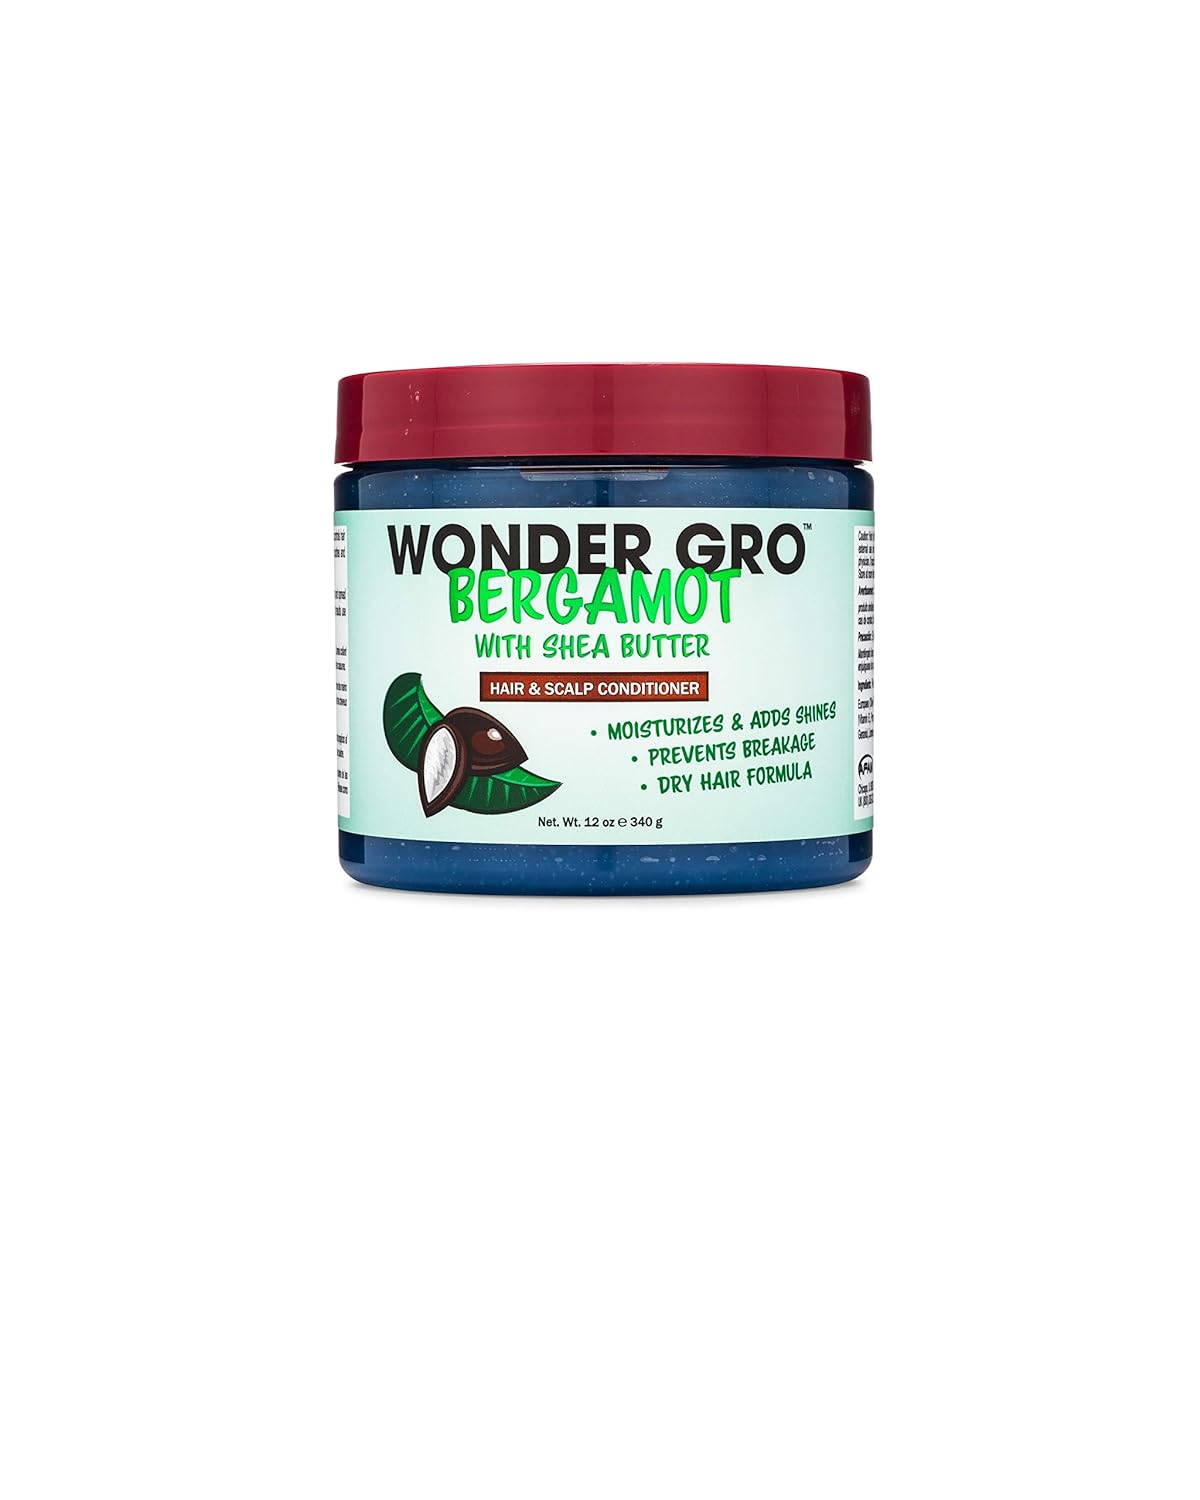 WonderGro Hair & Scalp Conditioner Bergamot With Shea Butter 12oz